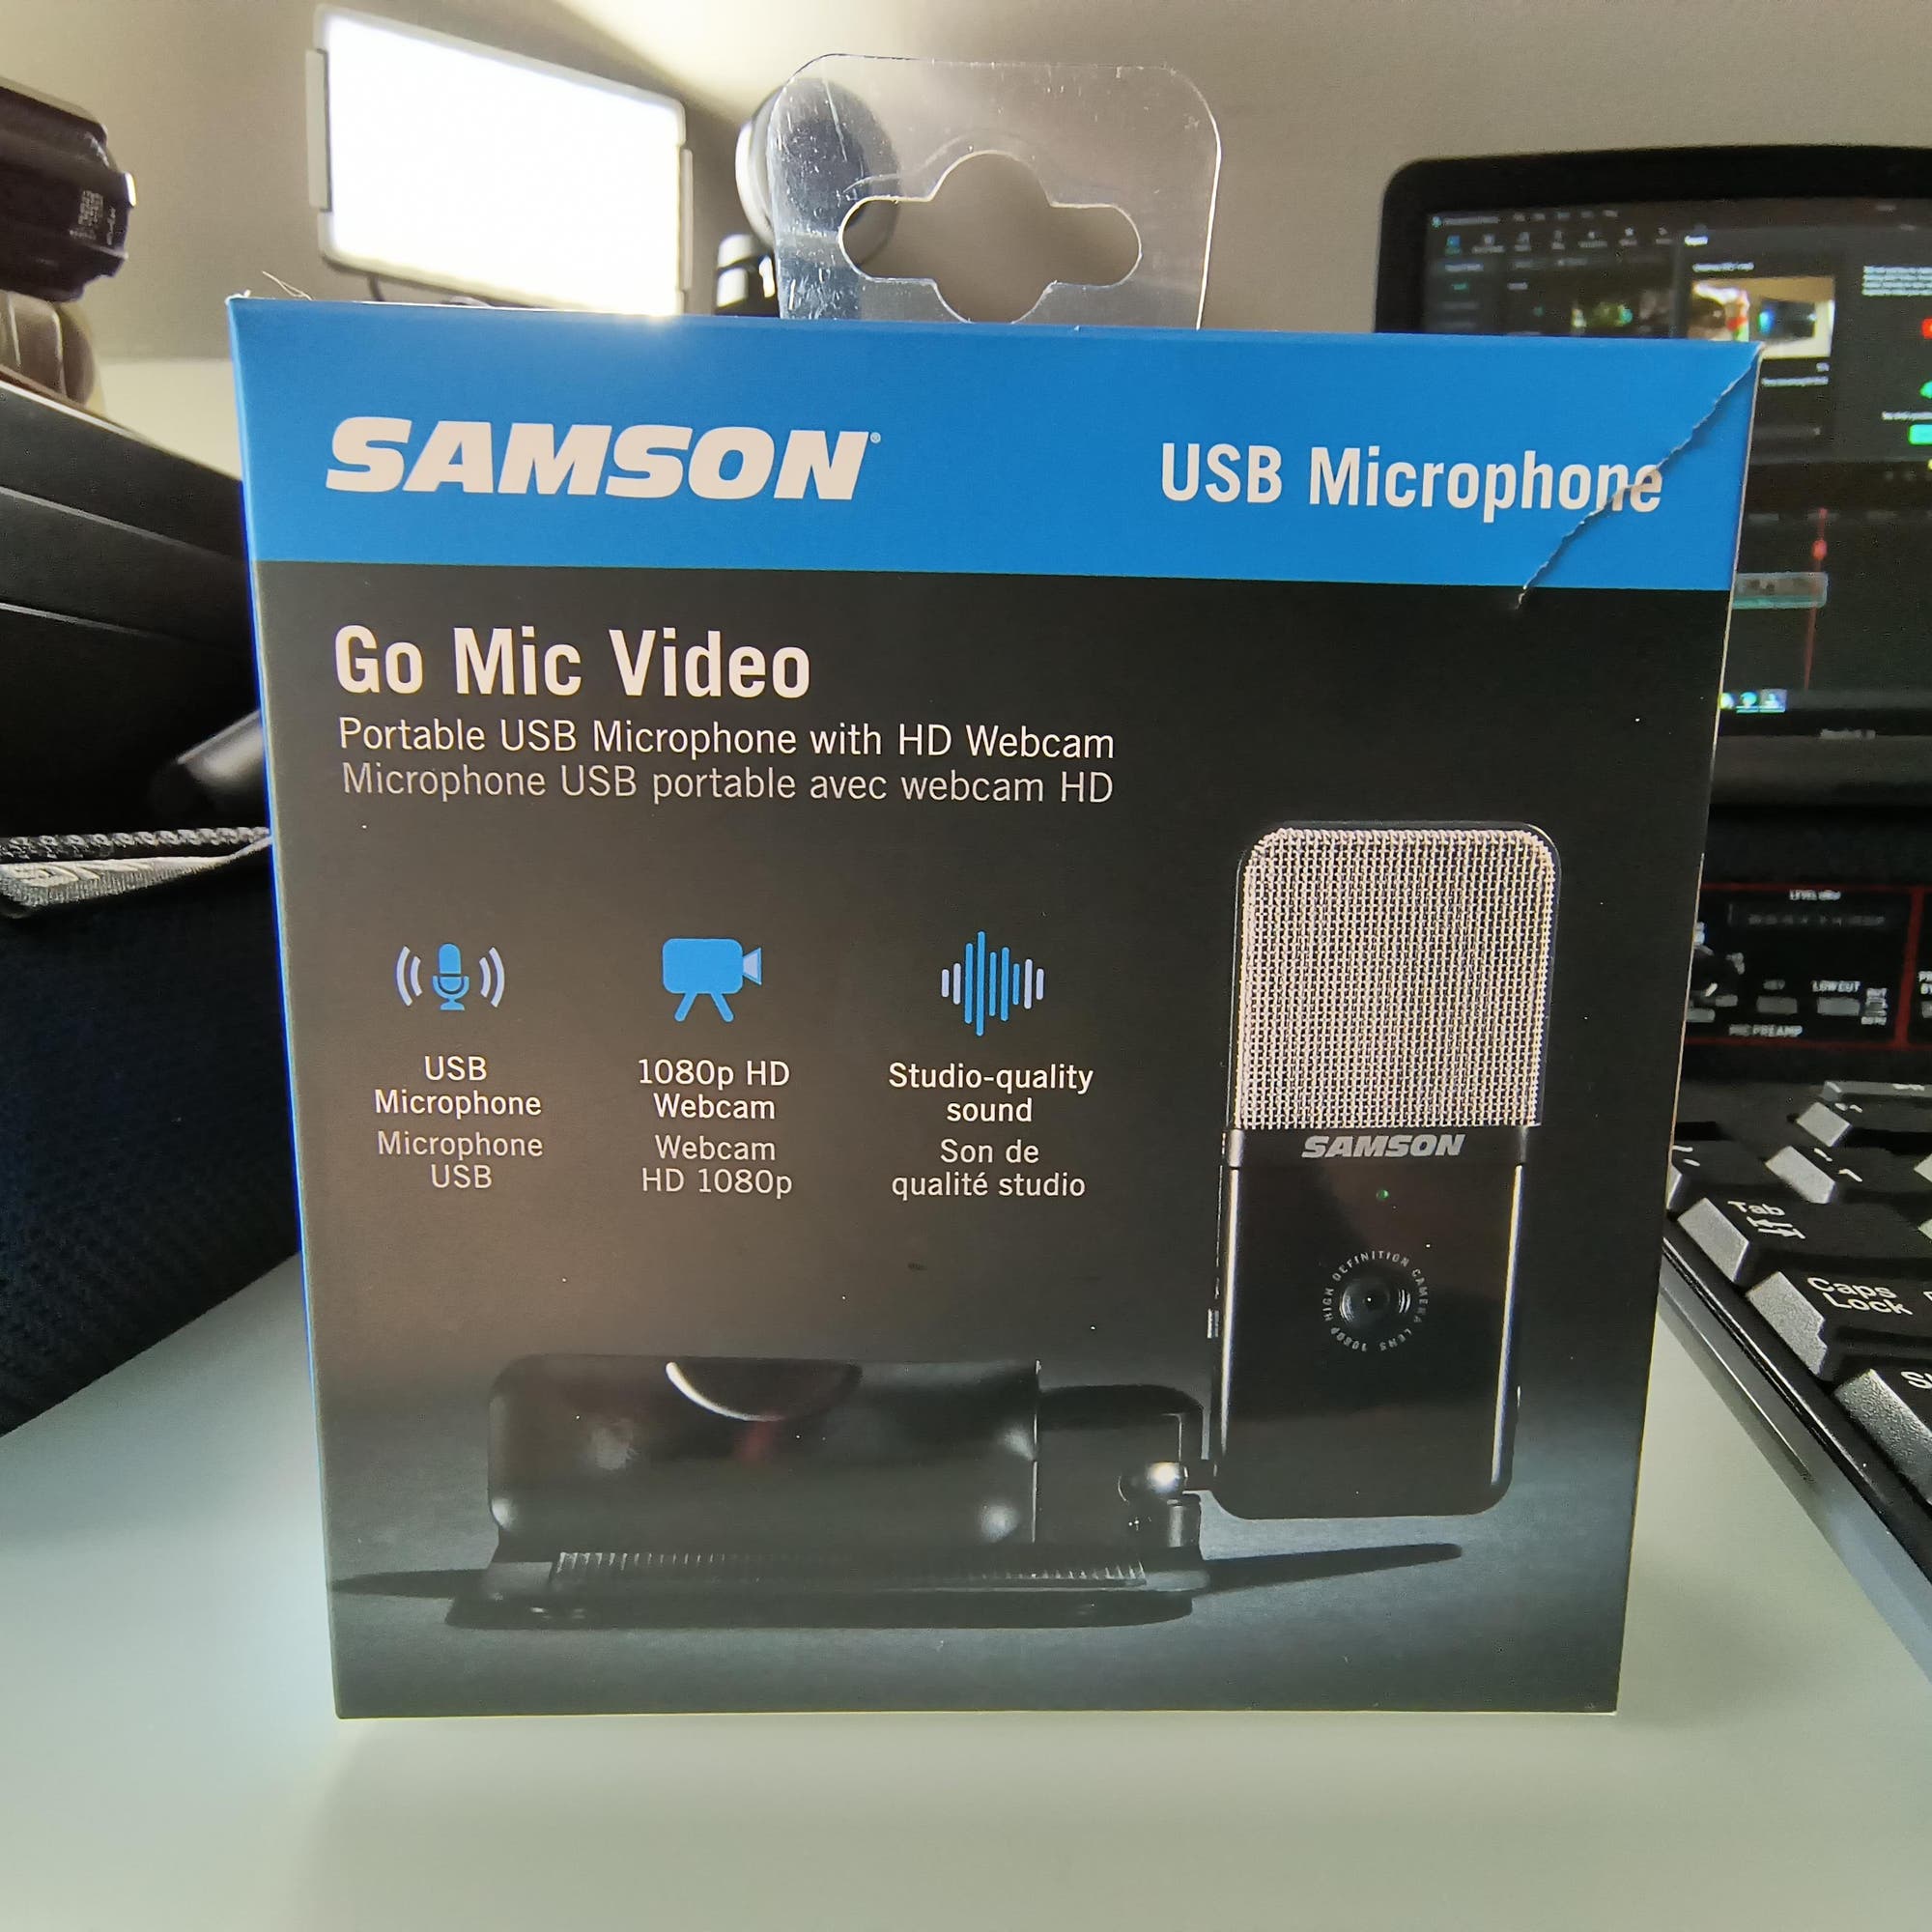 Samson Go Mic Video - Portable USB Microphone with HD Webcam